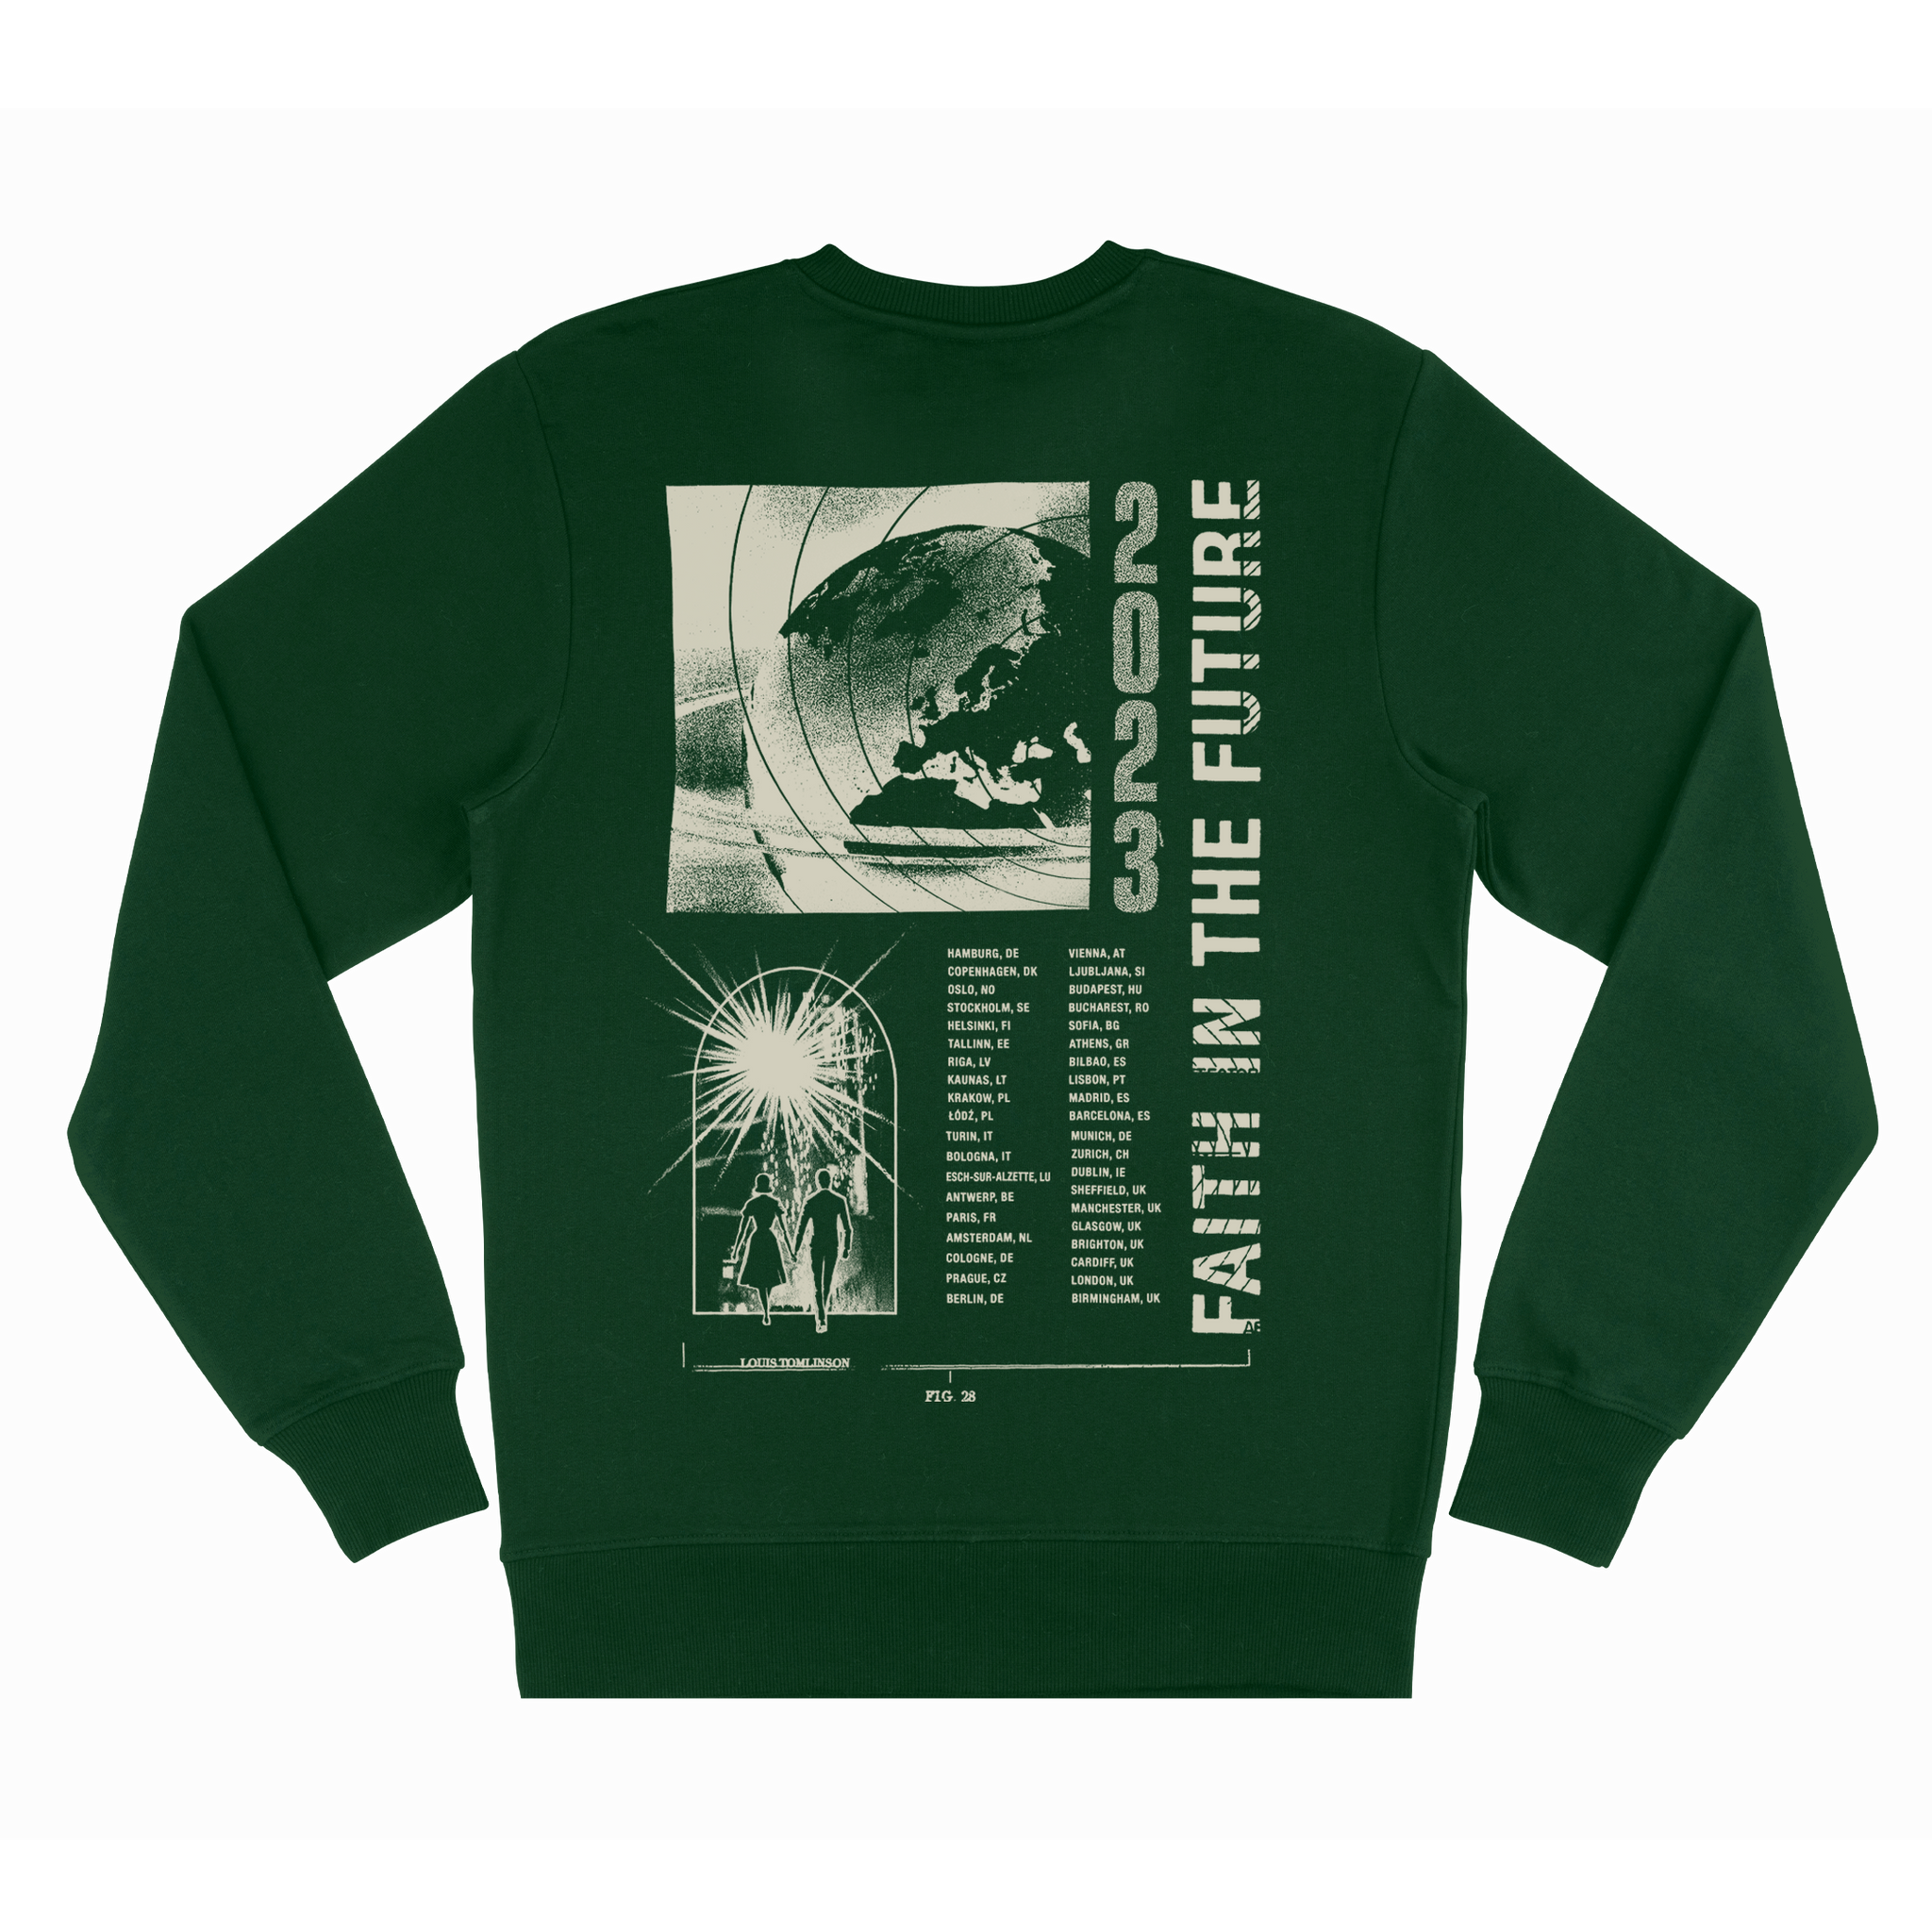 Faith In The Future World Tour Green Sweater - UK & Europe – Louis  Tomlinson Merch